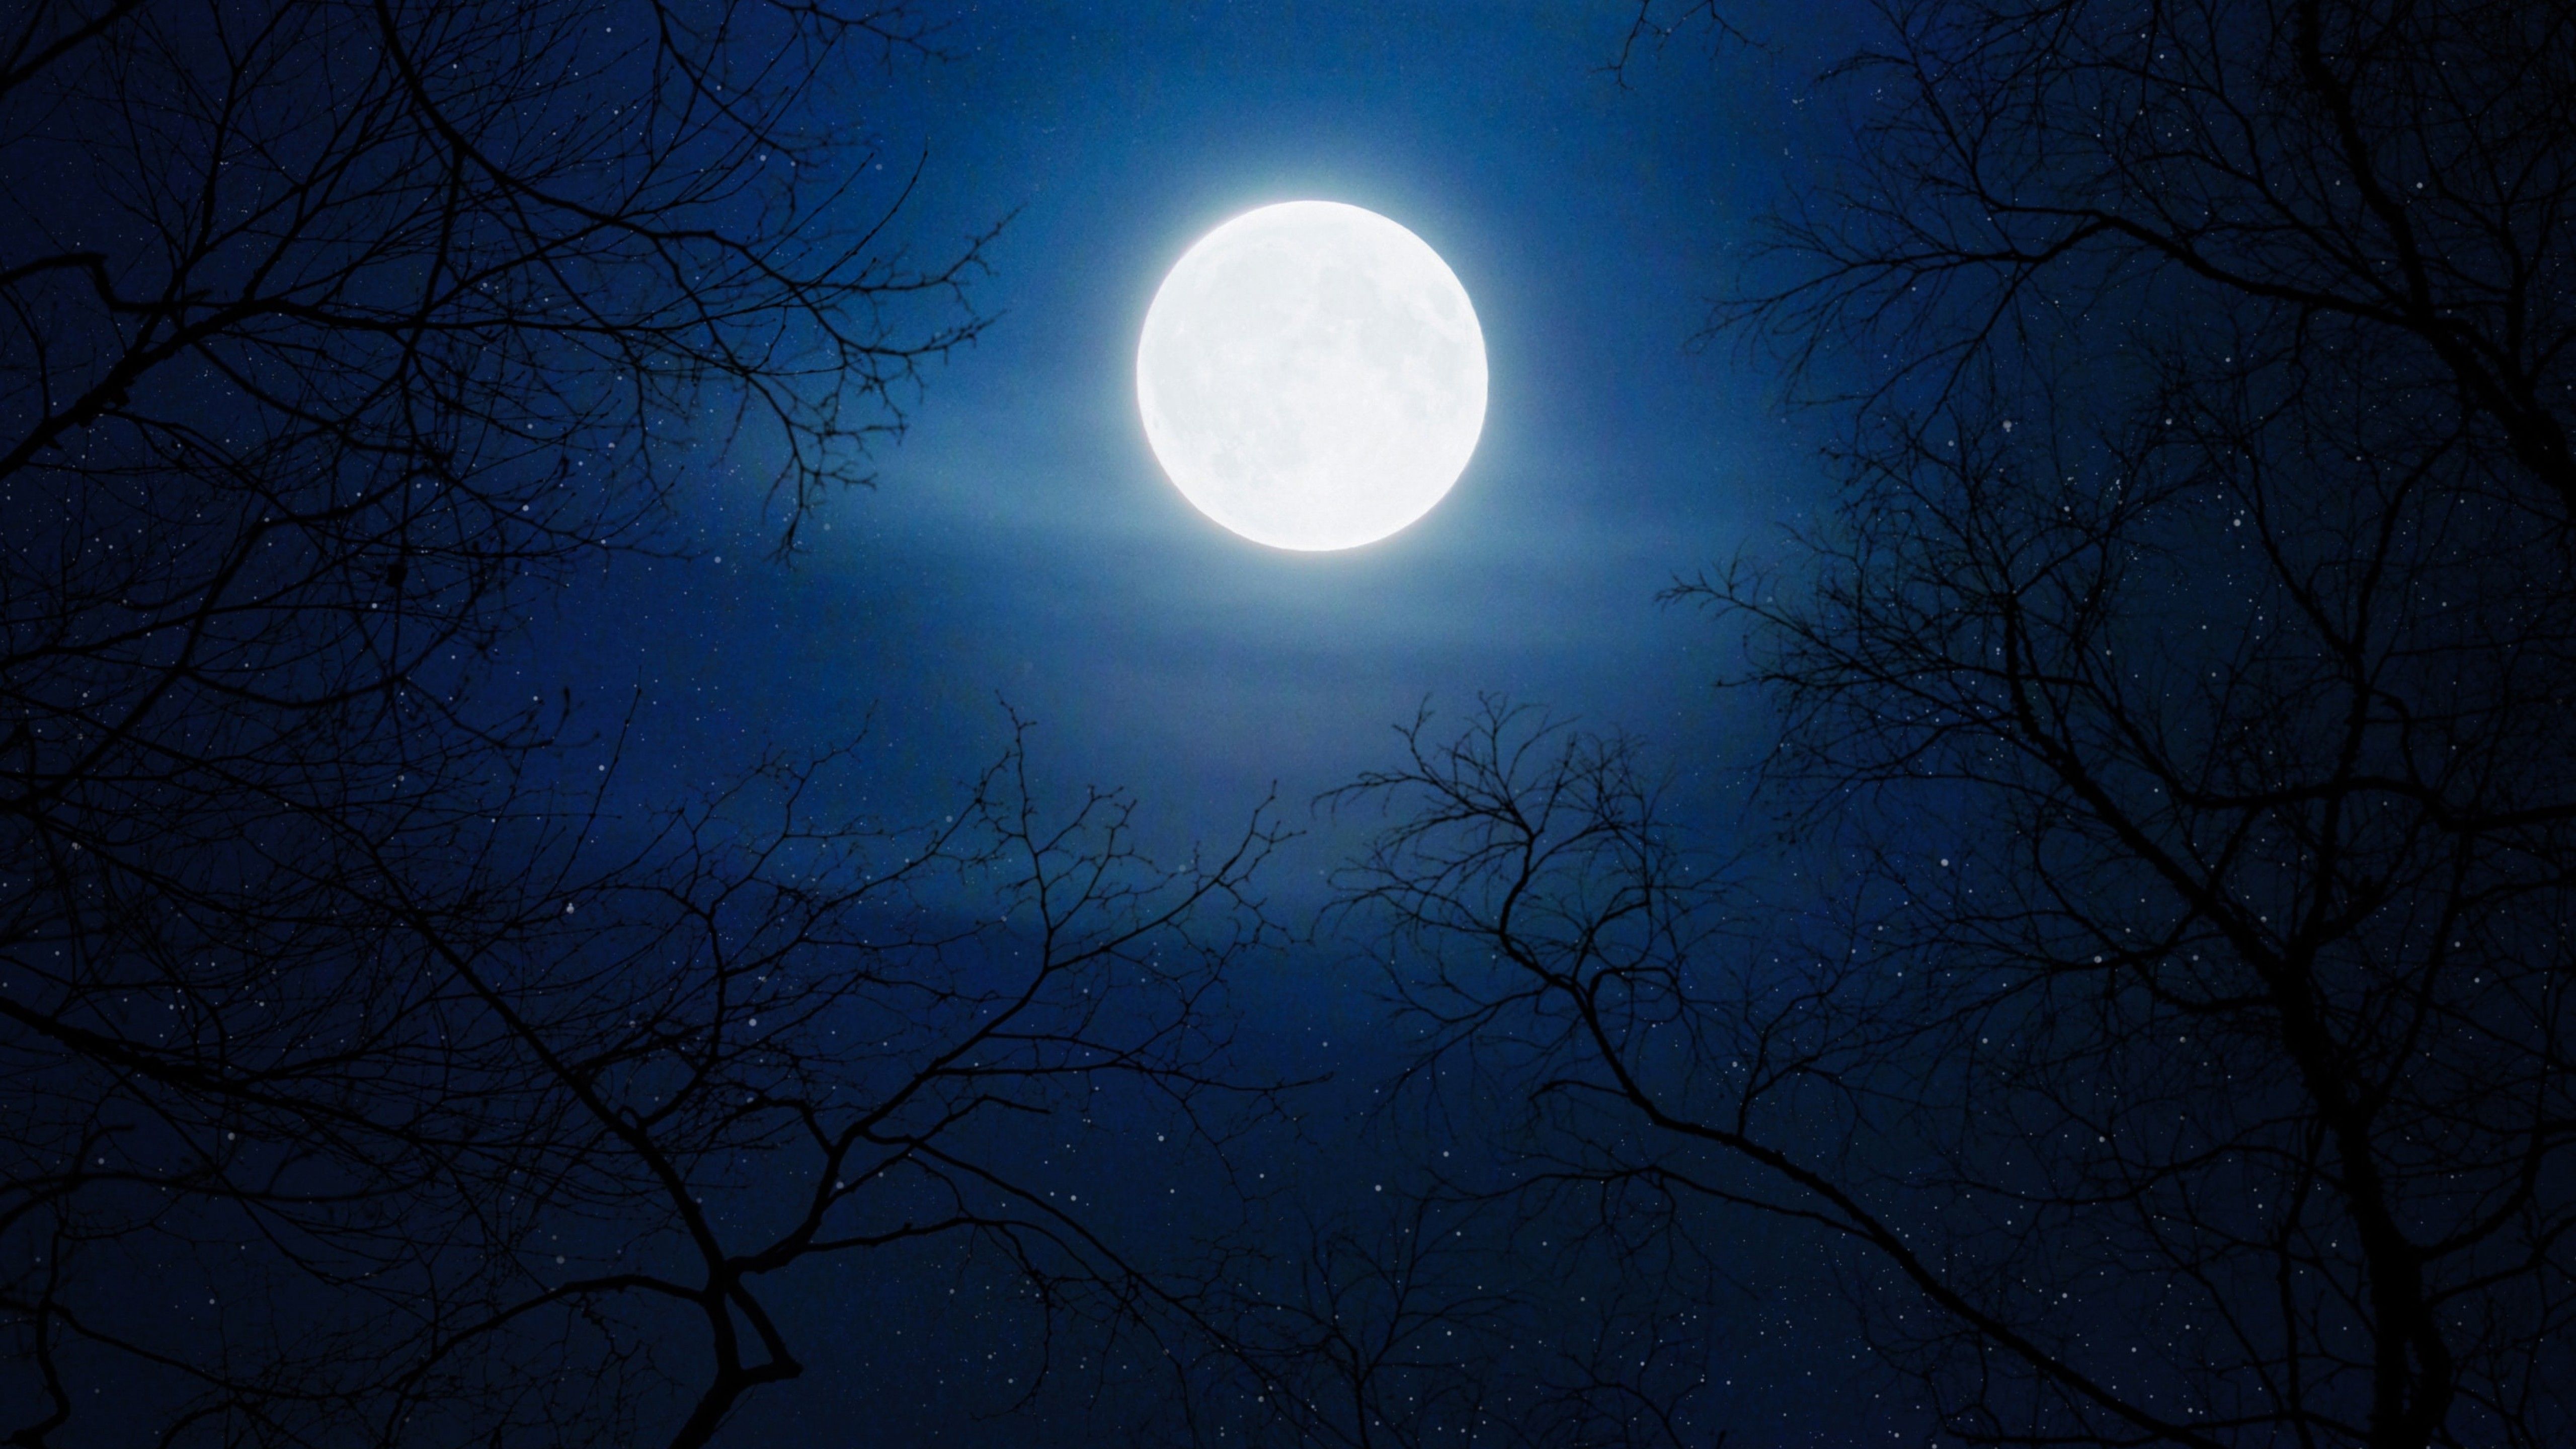 Moon 4K Wallpaper, Night, Cold, Trees, Blue sky, Full moon, Nature